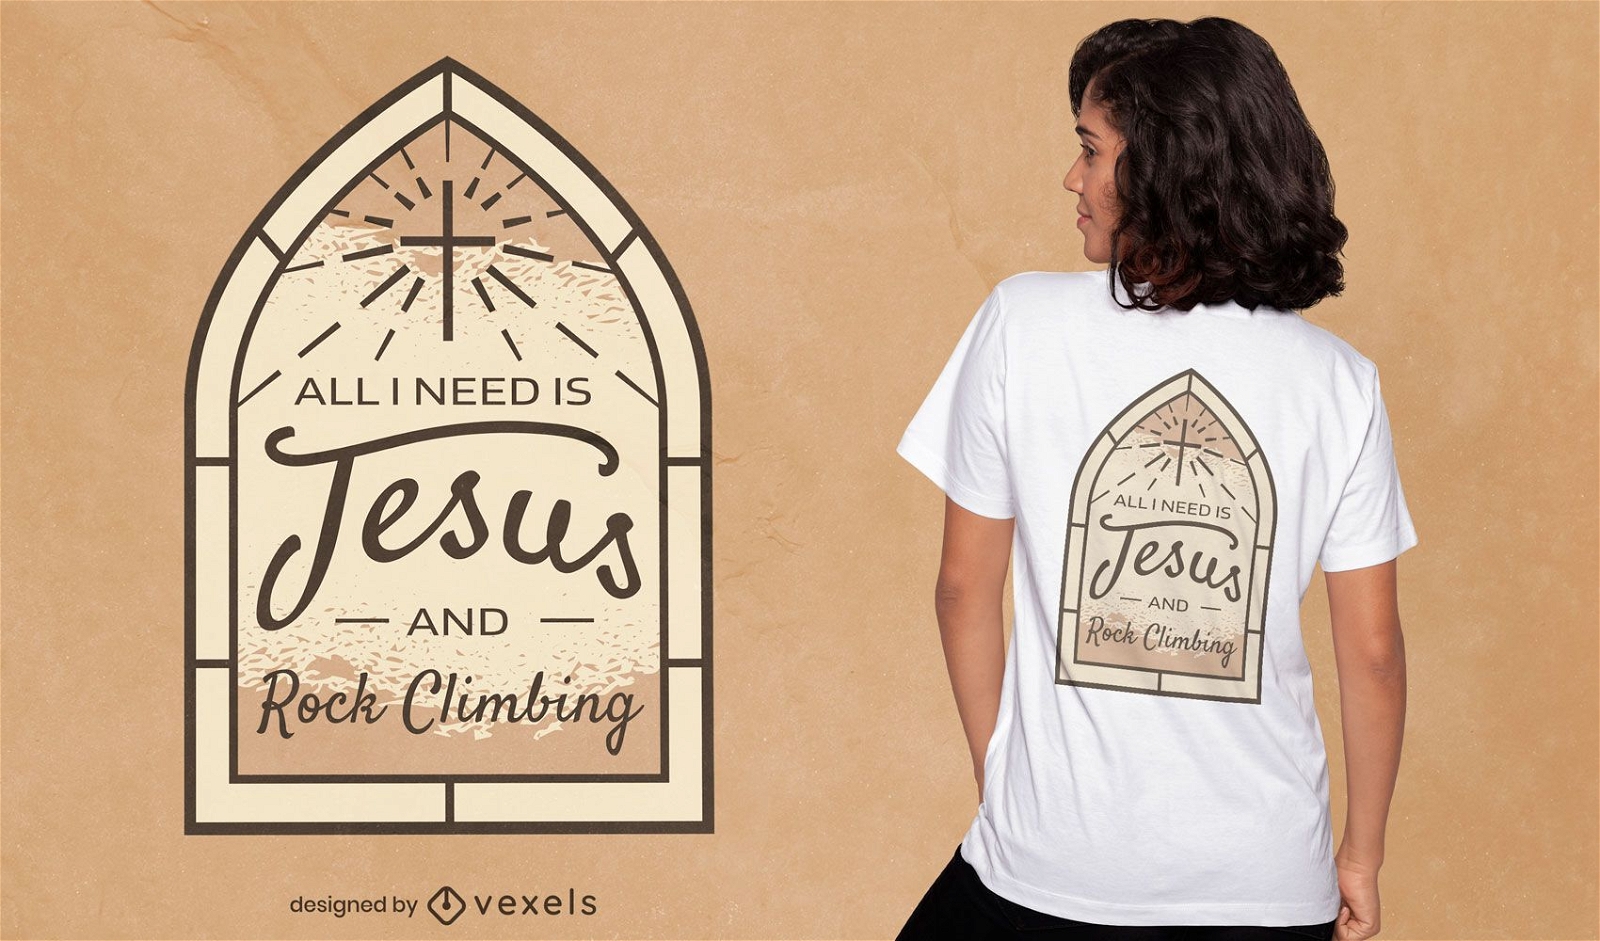 Jesus rock climbing quote t-shirt design